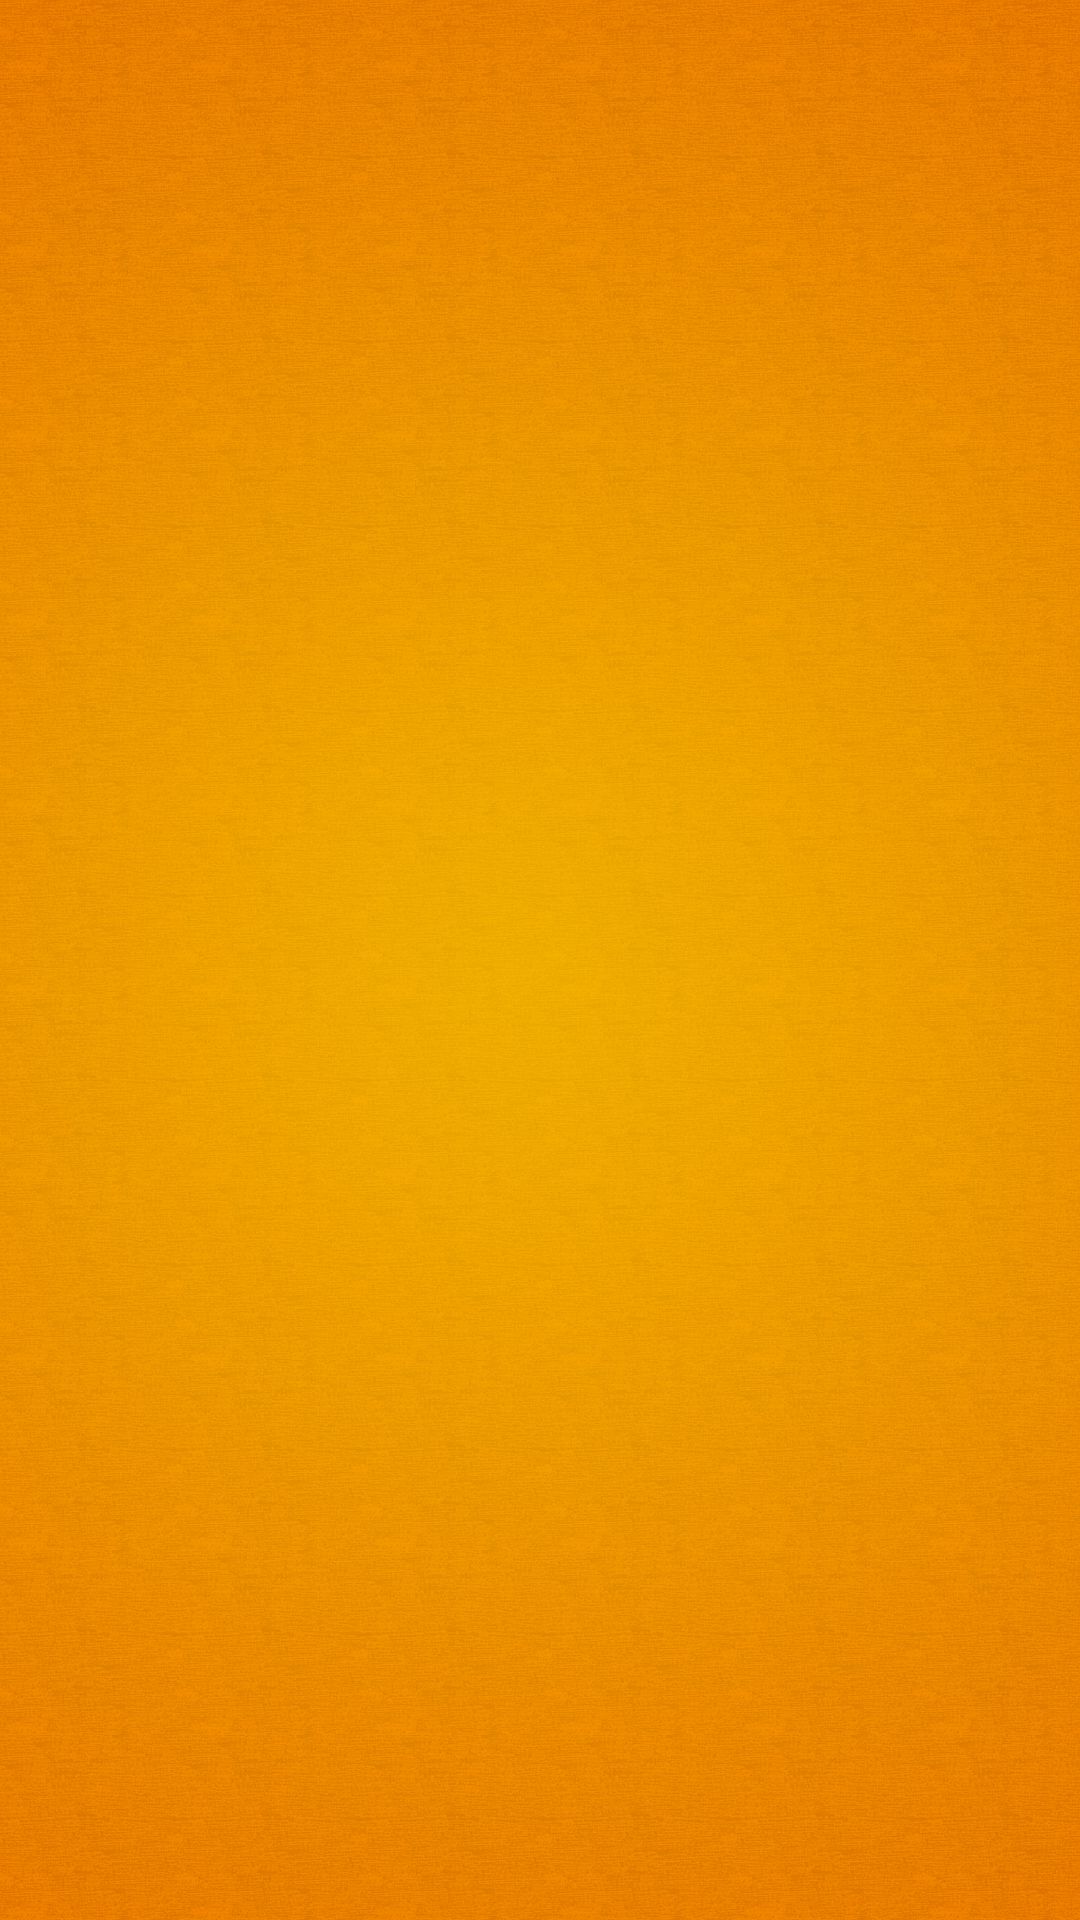 Download wallpaper 1080x1920 orange, yellow, texture, background samsung  galaxy s4, s5, note, sony xperia z, z1, z2, z3, htc one, lenovo vibe hd  background